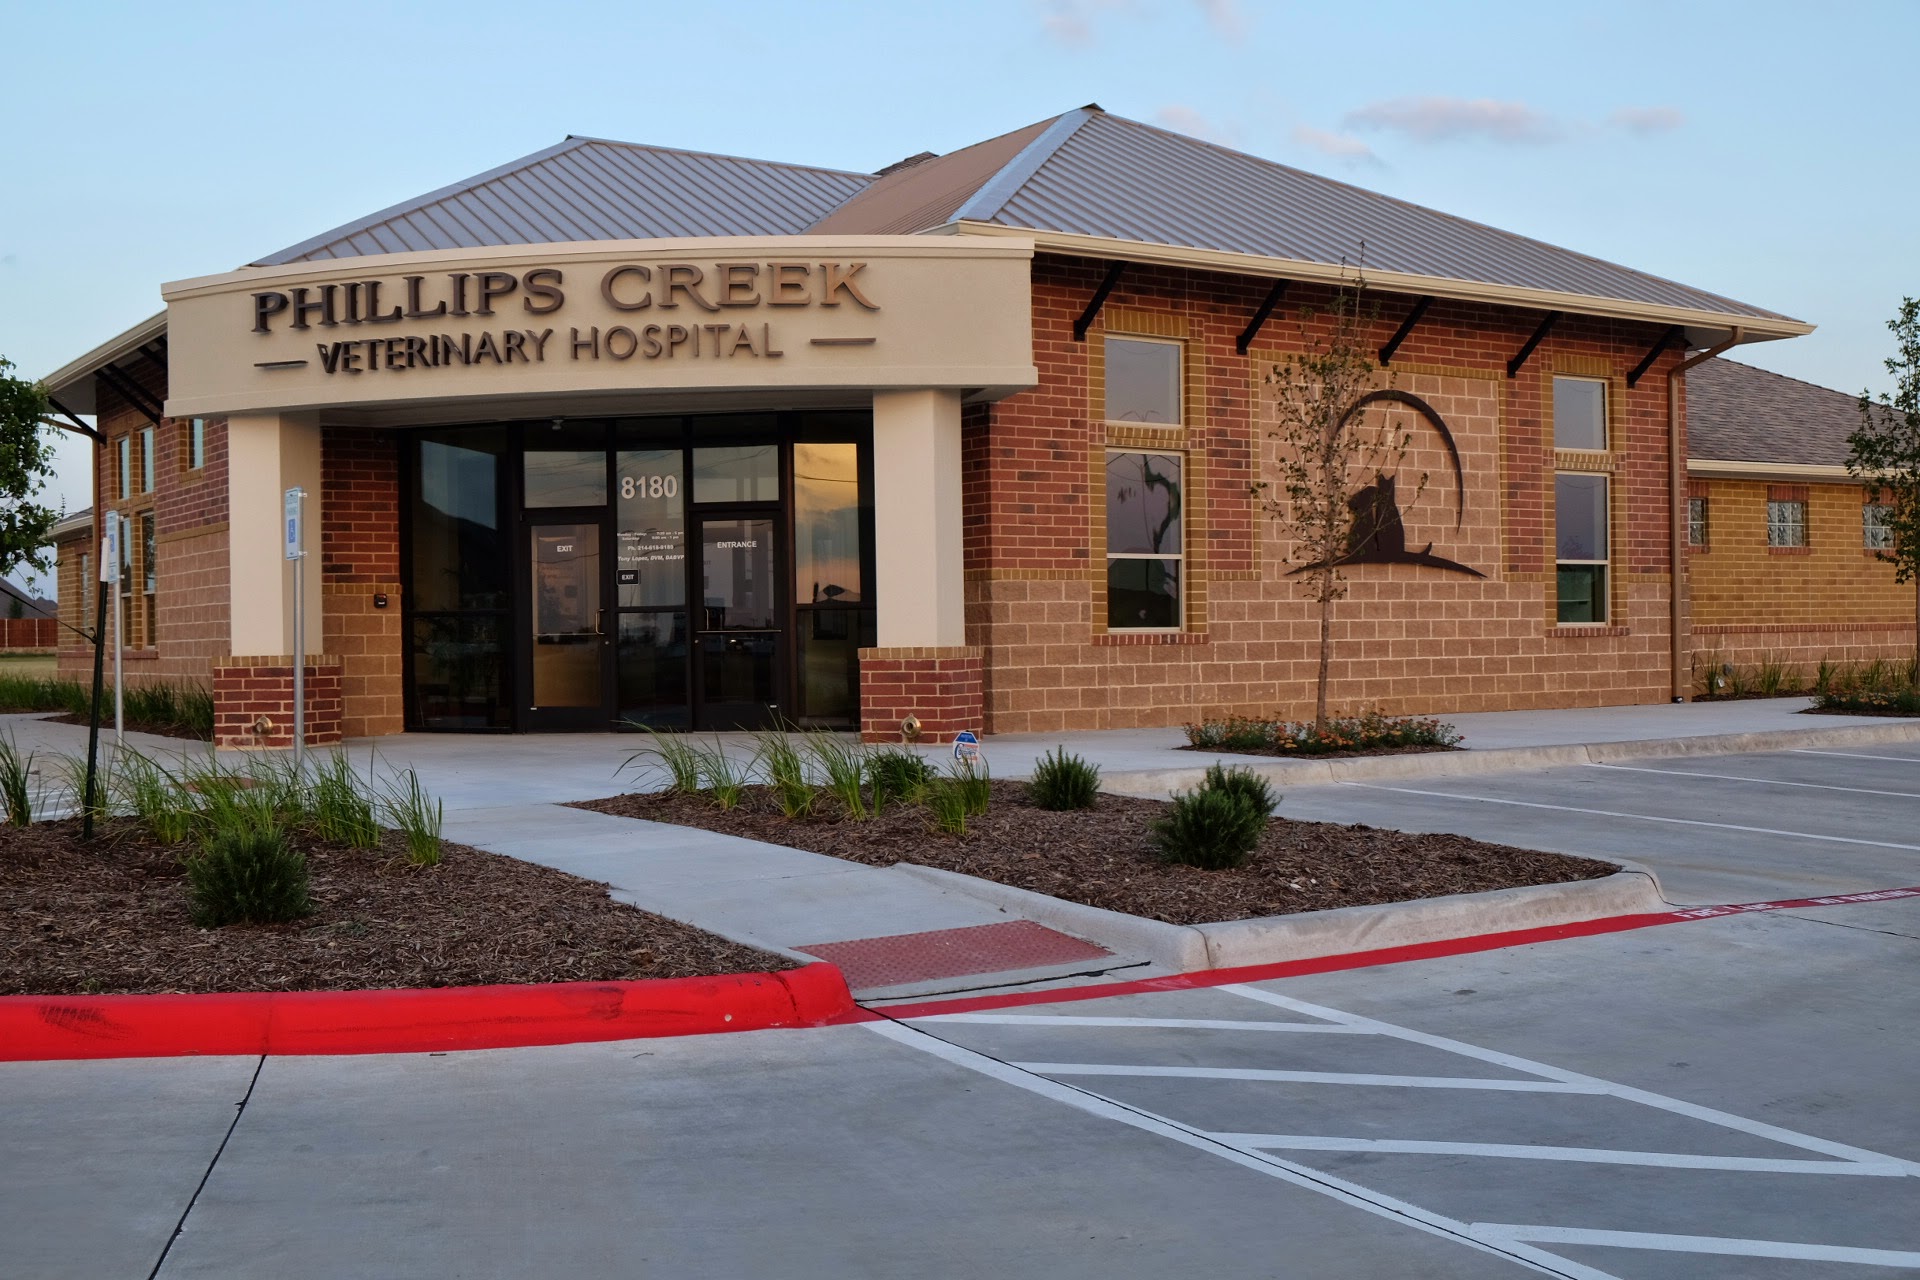 Phillips Creek Veterinary Hospital